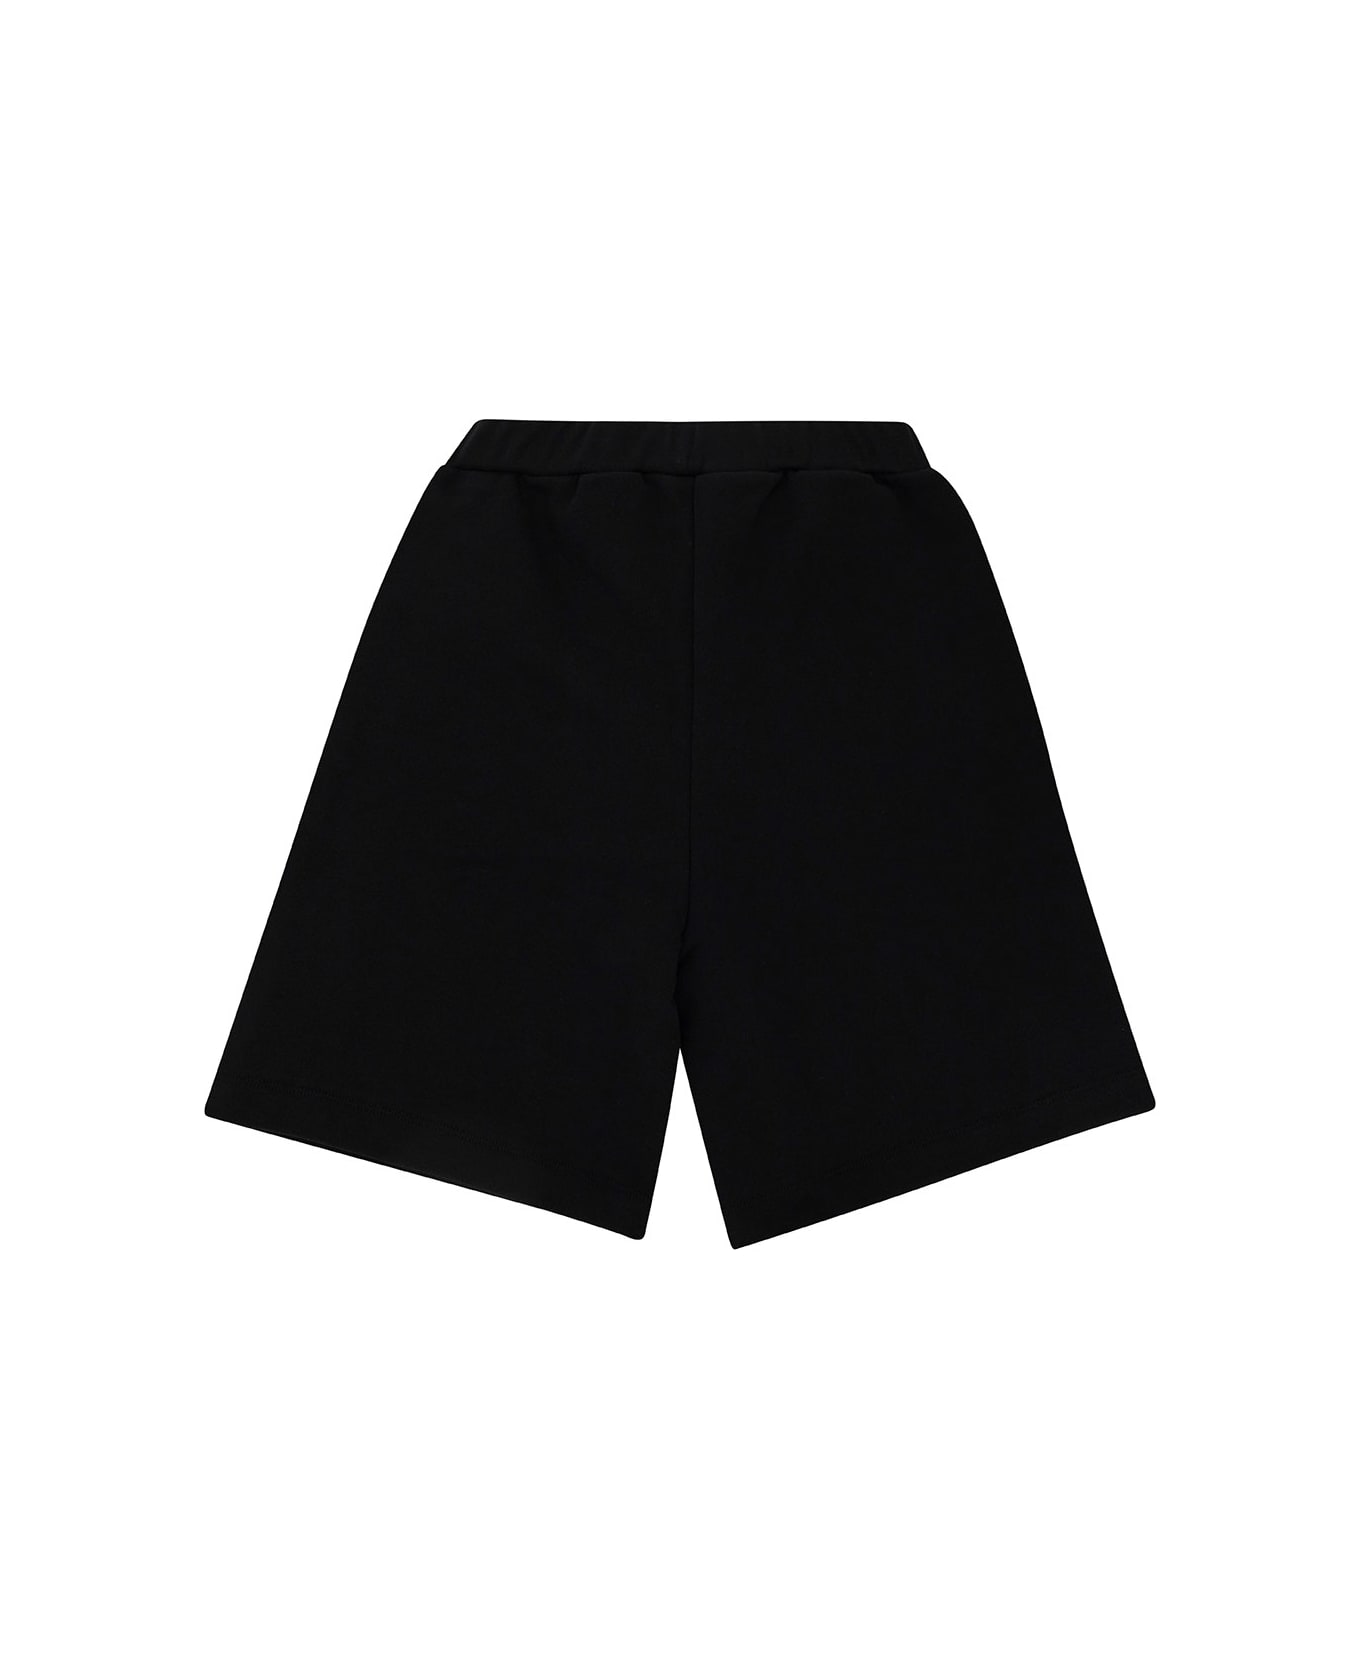 Marni Black Shorts With Contrasting Logo Print In Cotton Boy - Black